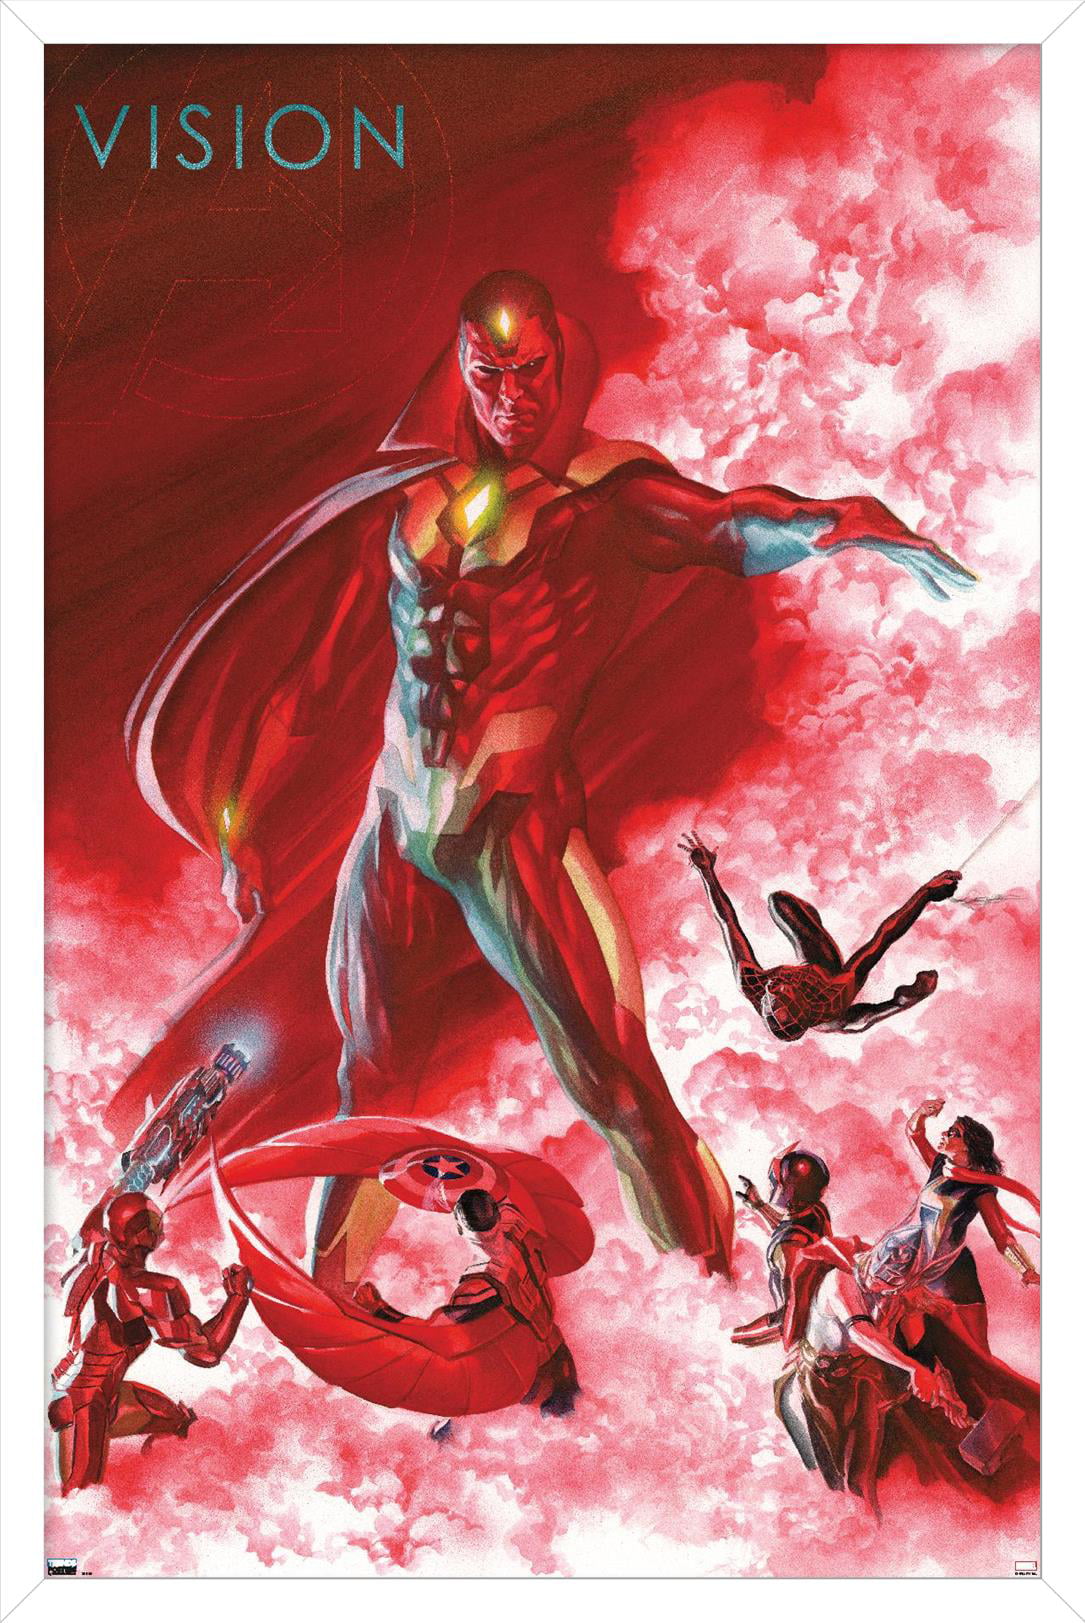 Super Hero Avengers Magic Window Wall Art Adhesive Sticker poster multi size v4*